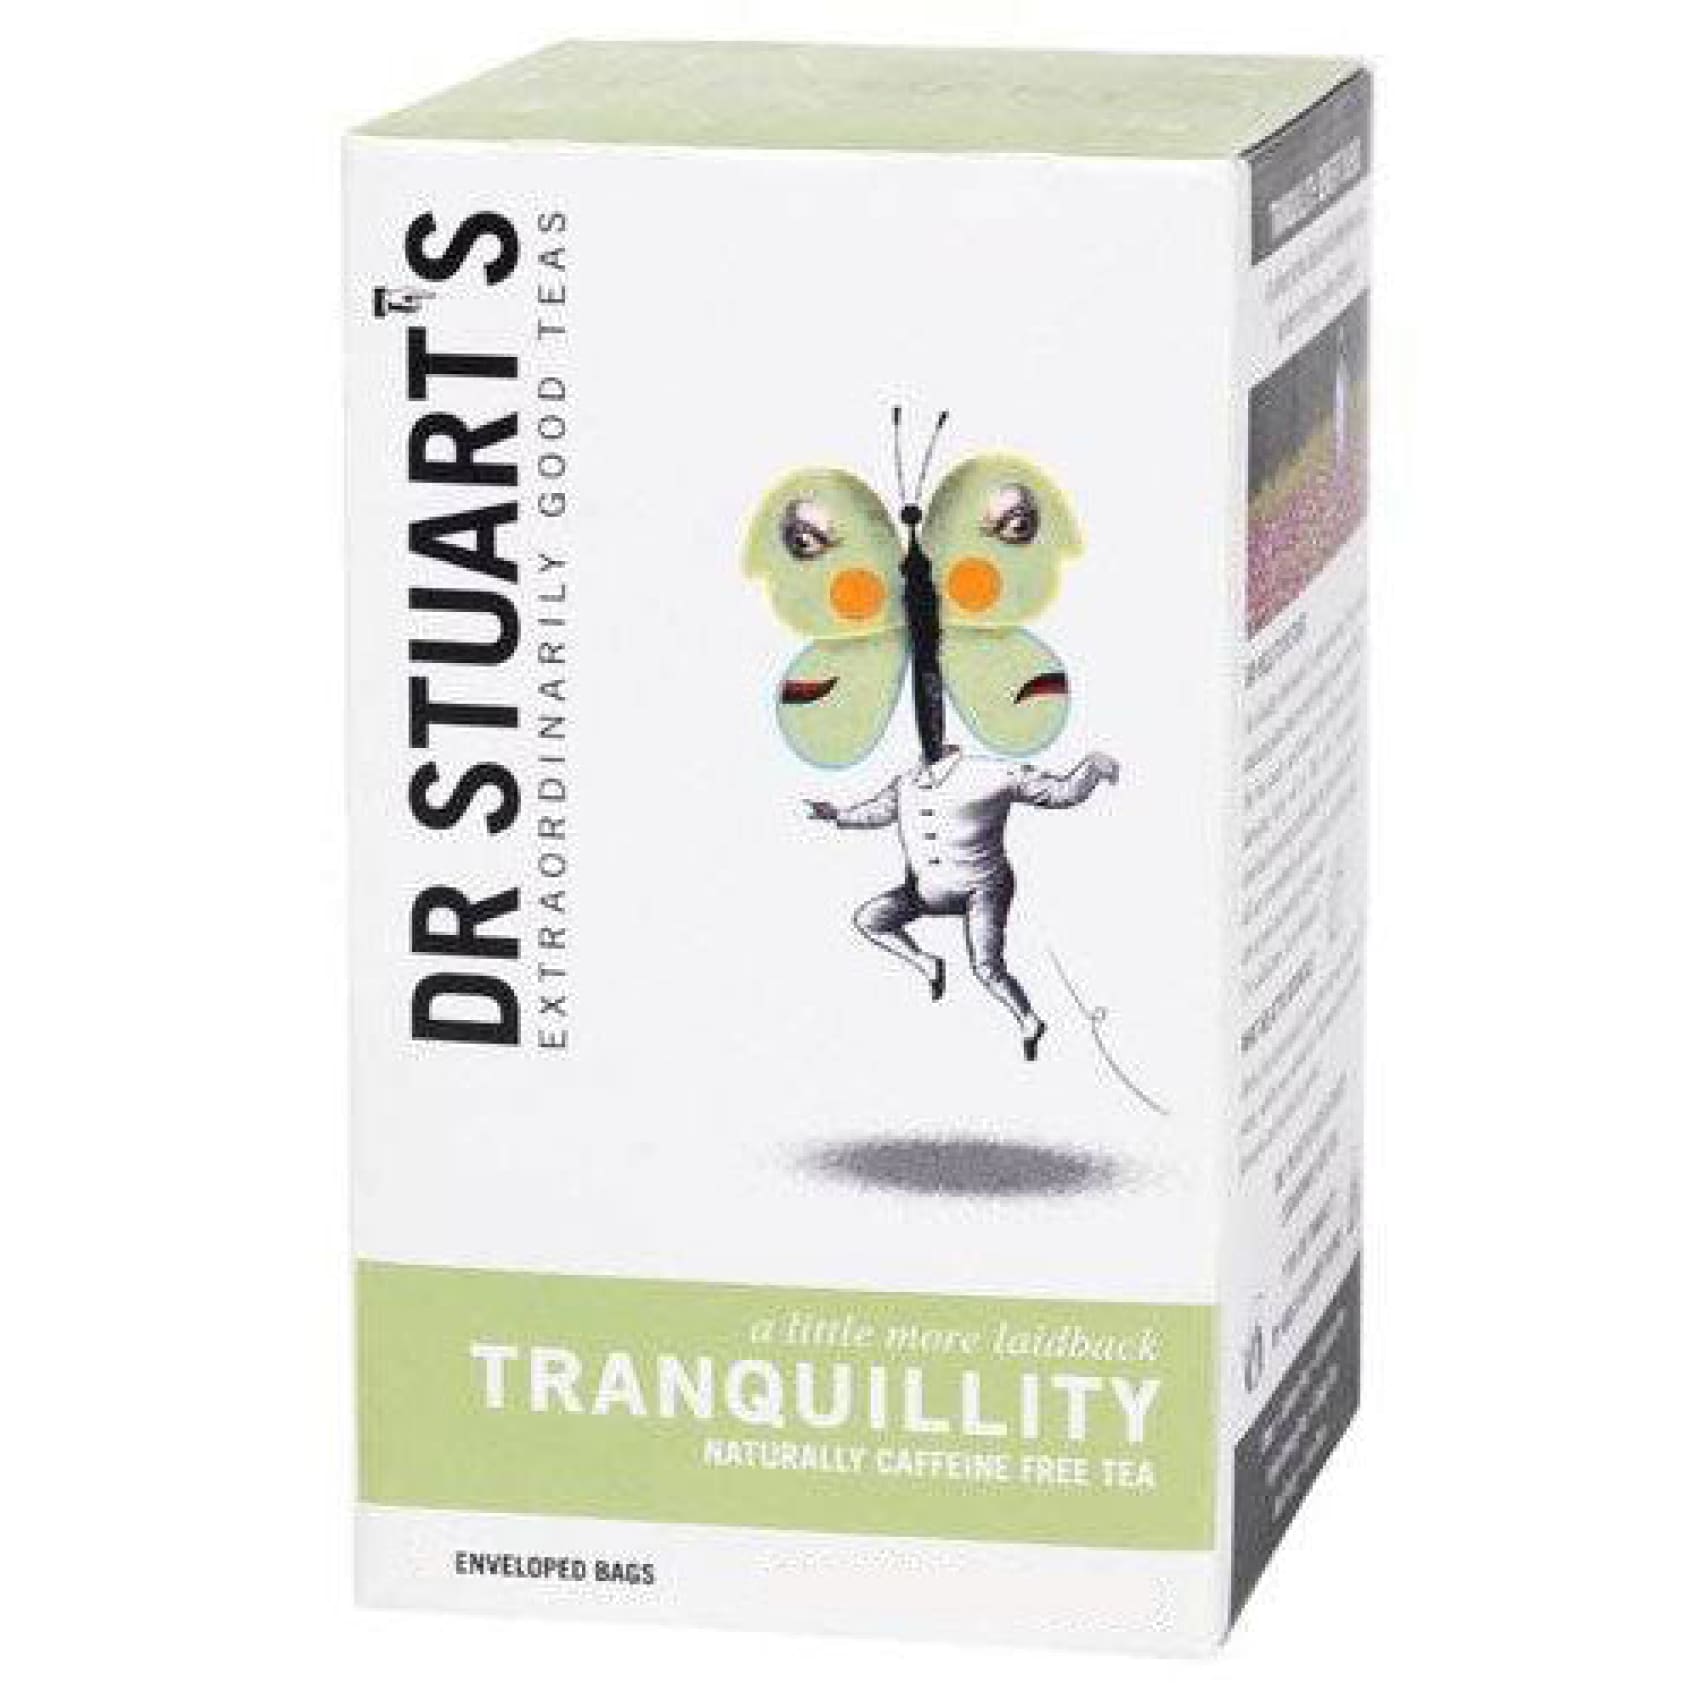 Dr Stuarts - Tranquility Tea